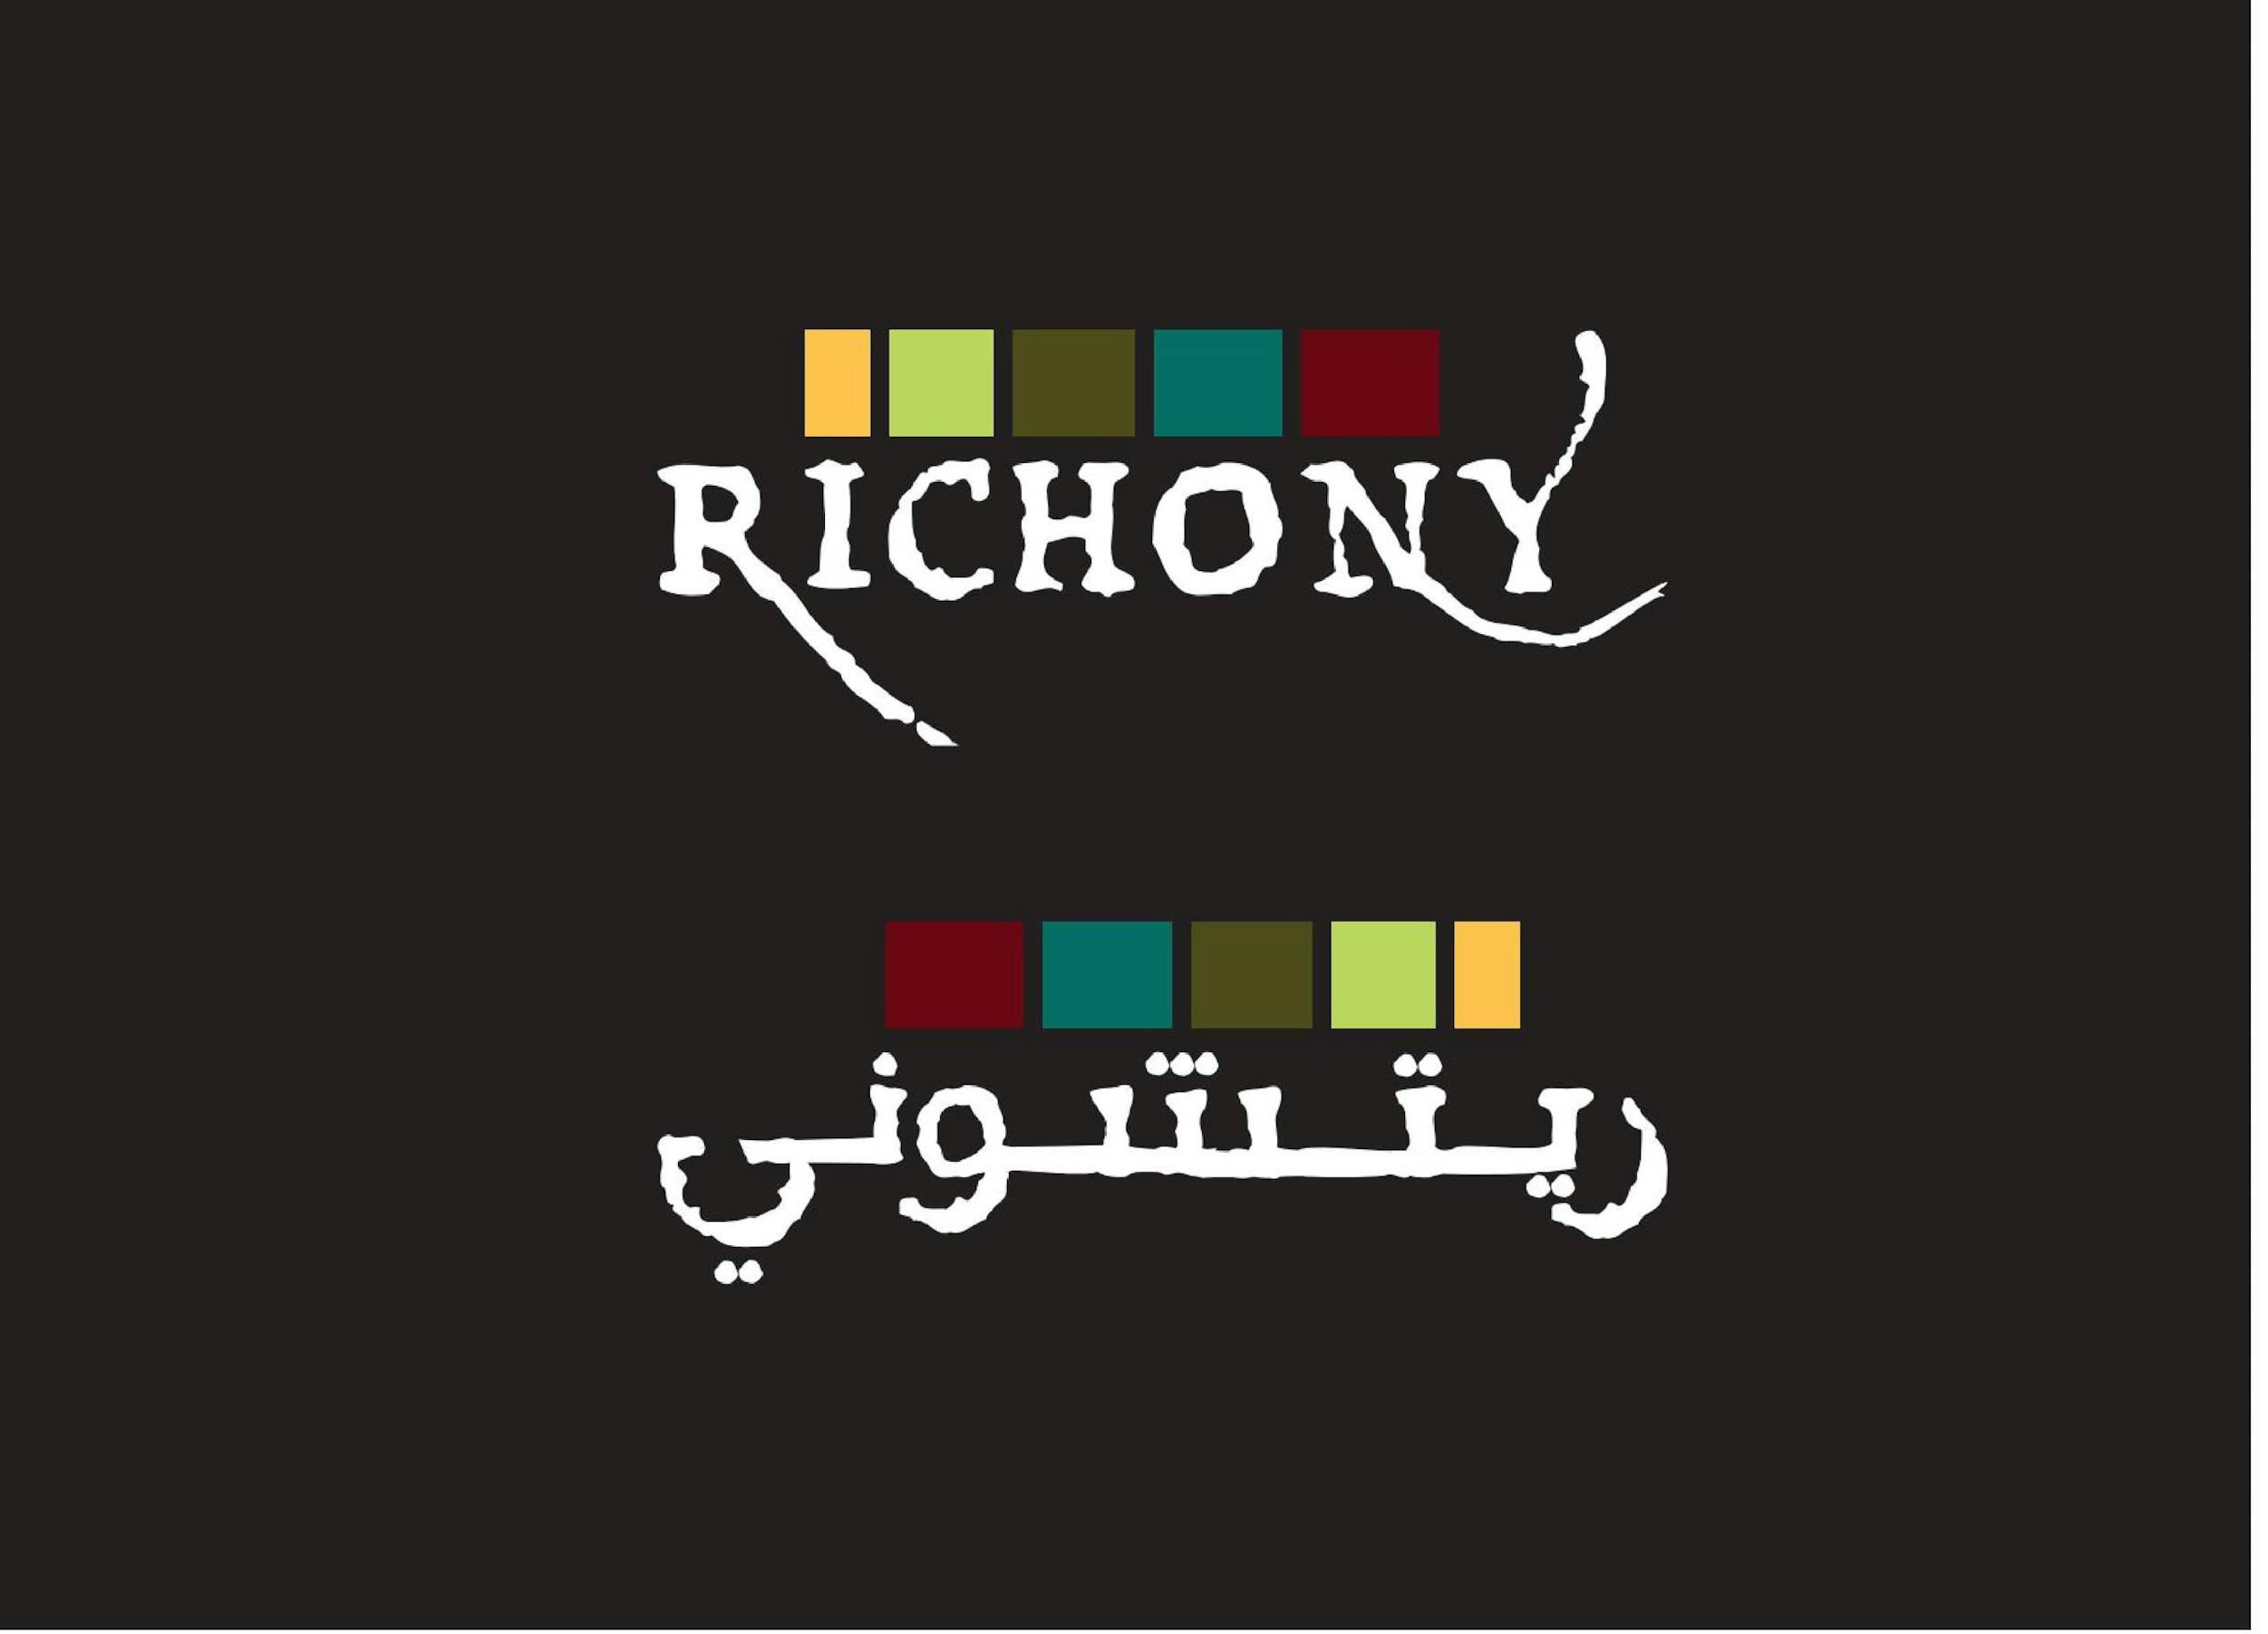 Richony